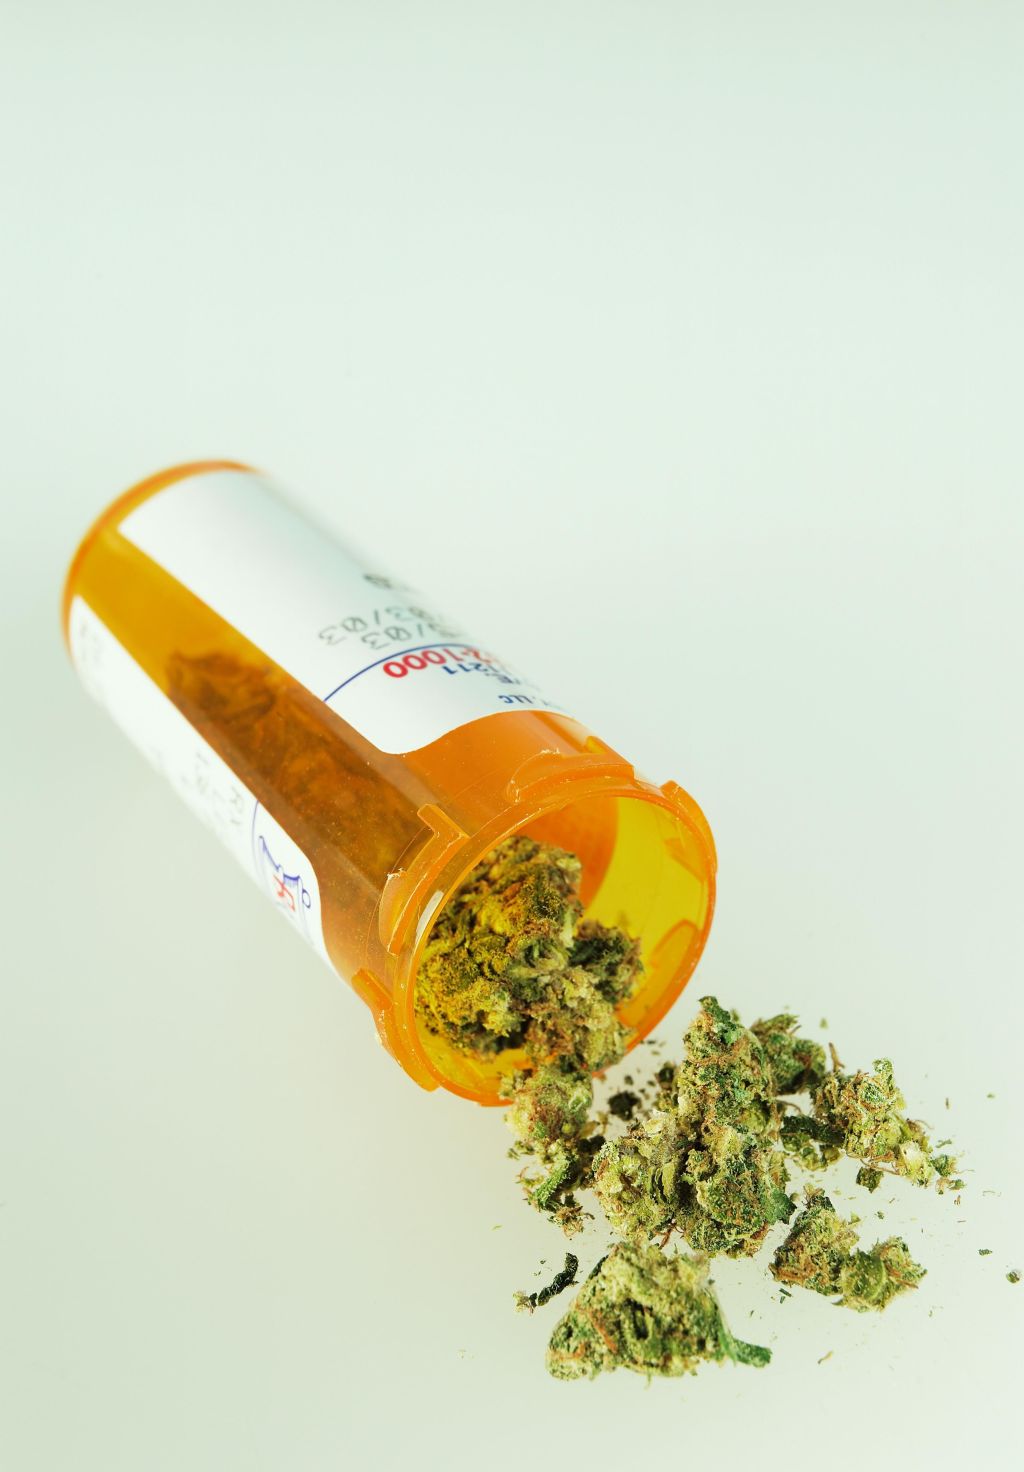 Marijuana spilling out of prescription bottle